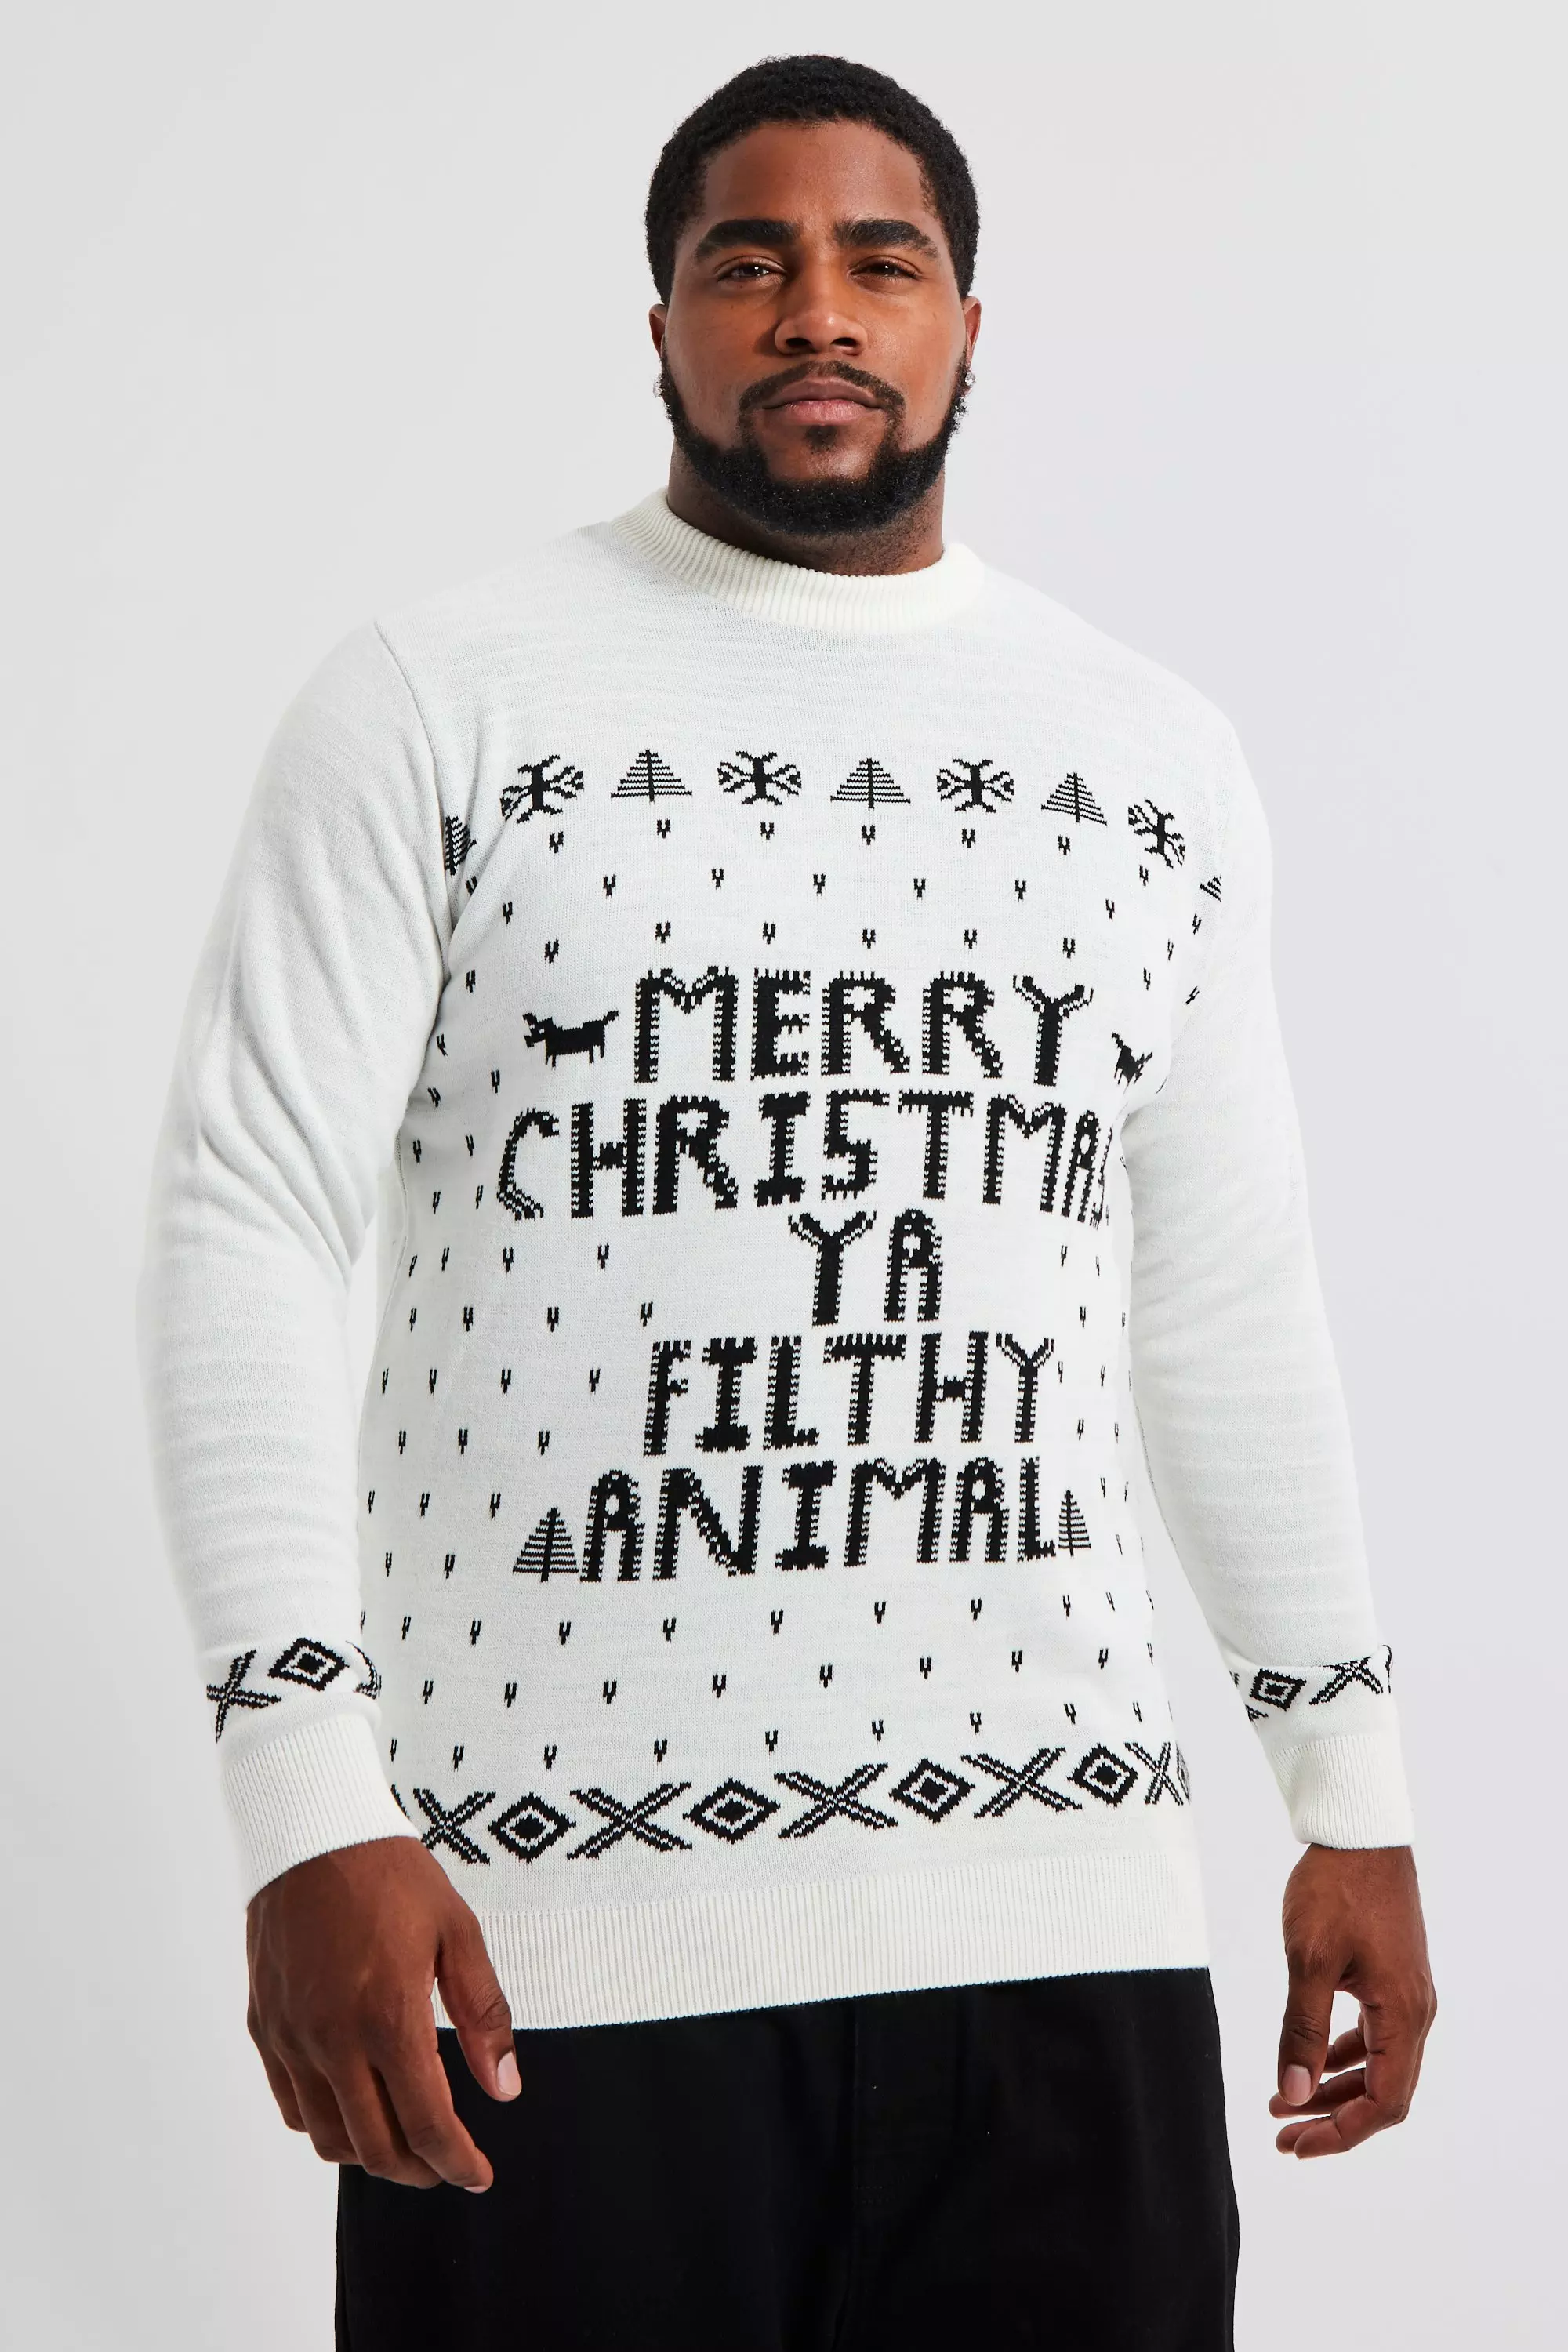 Plus Ya Filthy Animal Christmas Sweater Ecru